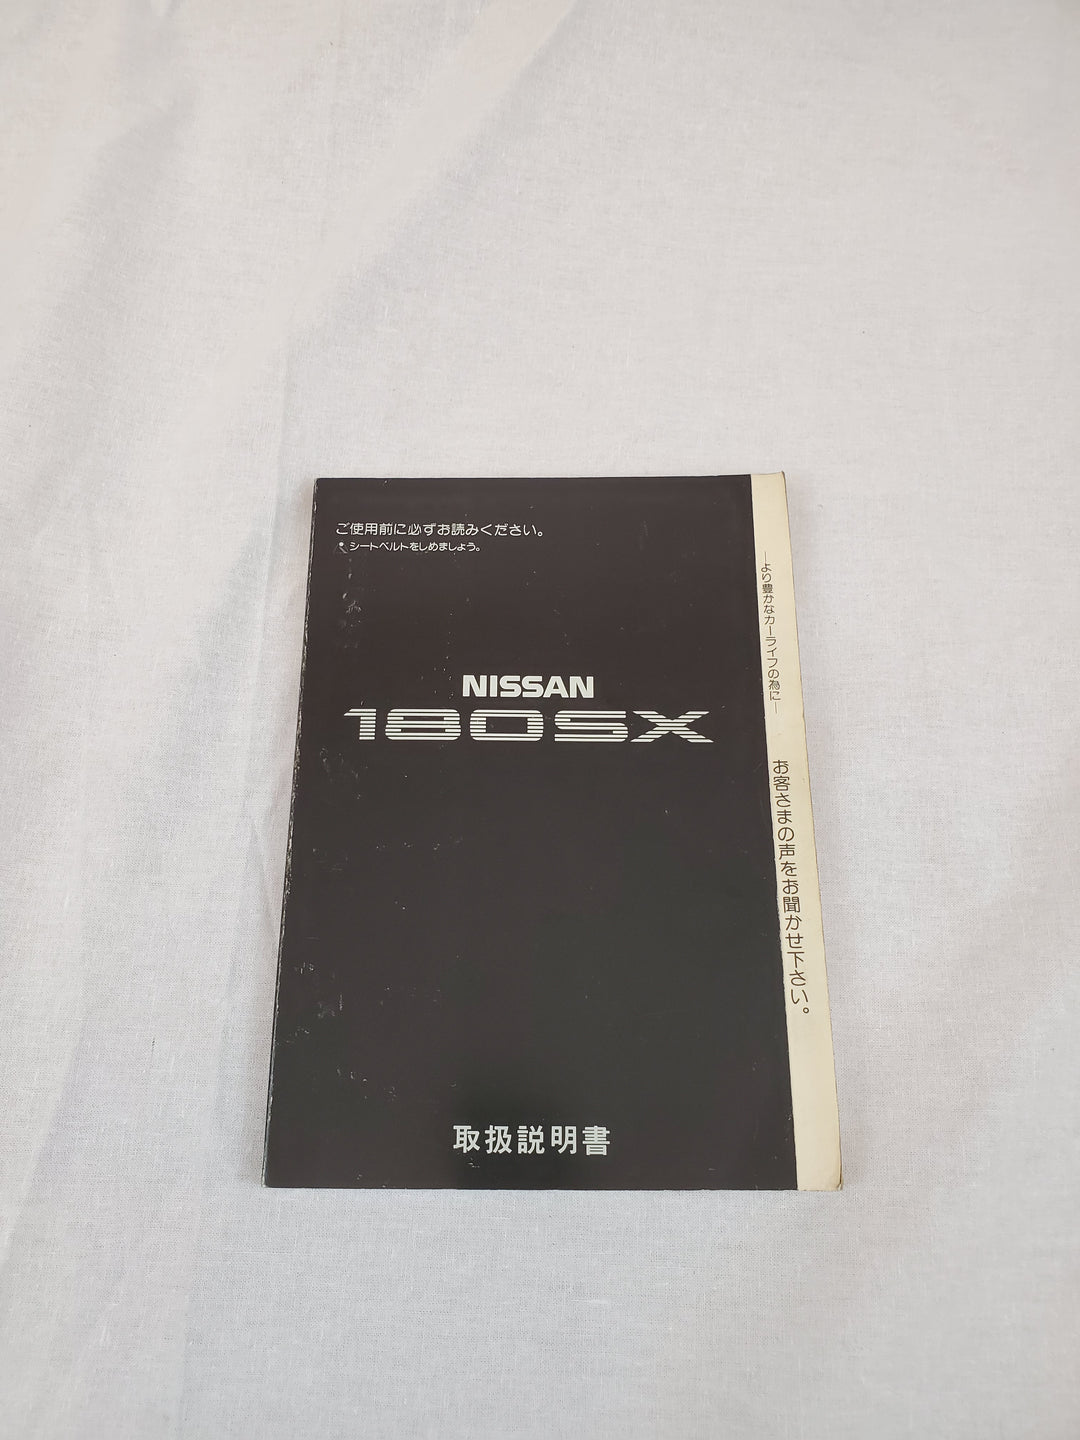 Nissan 180sx